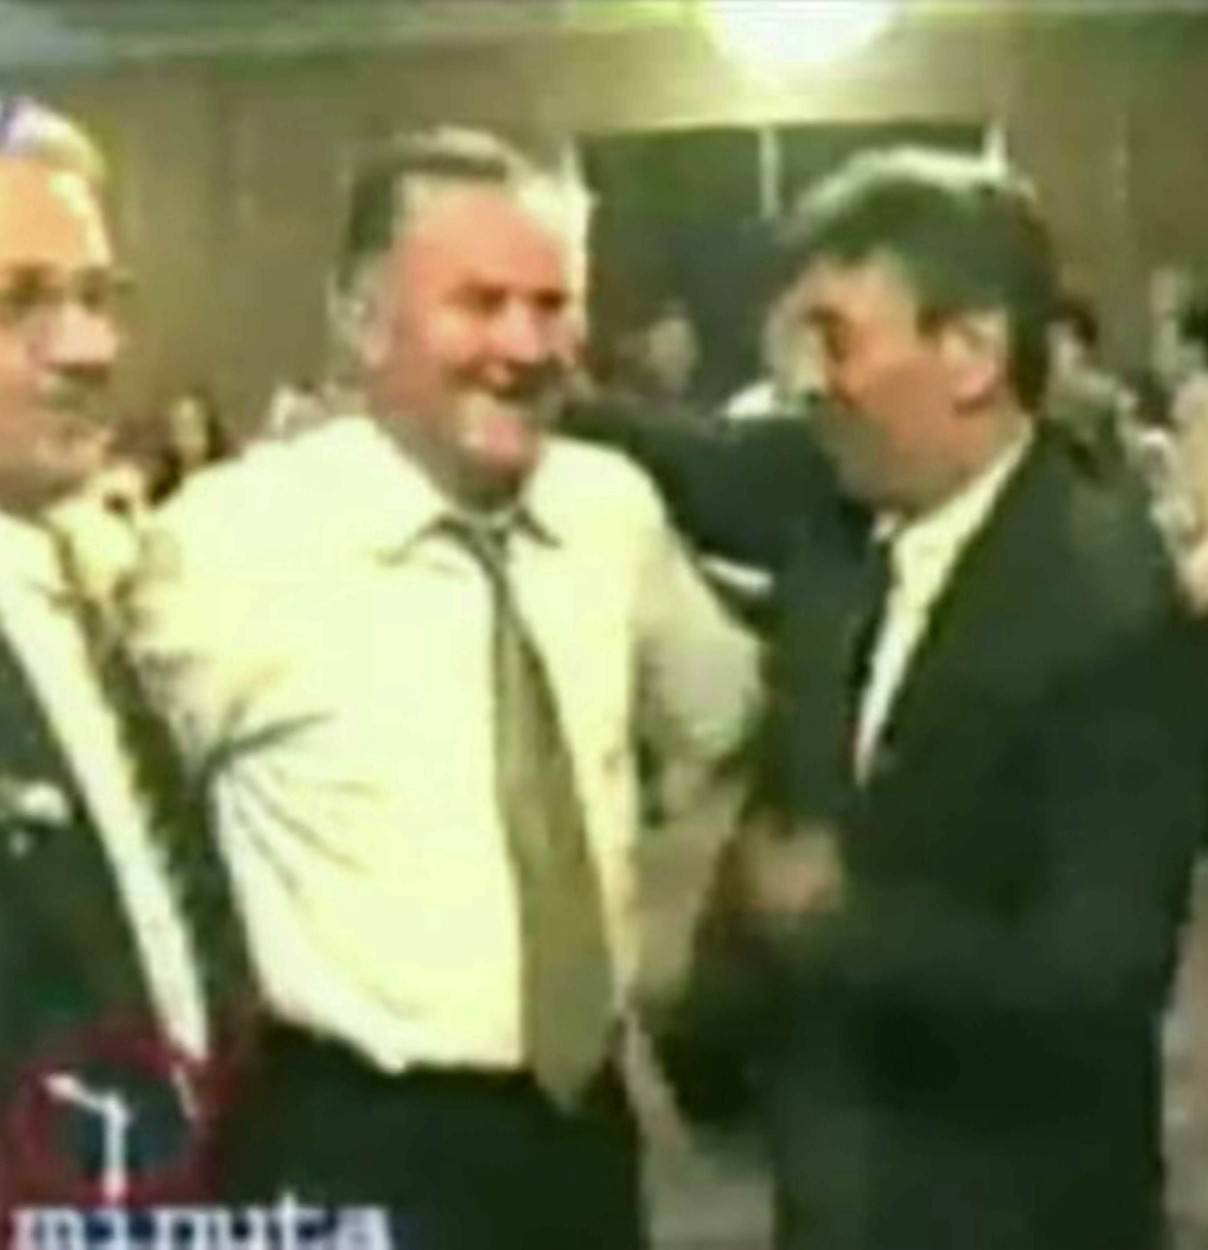 Ratko Mladic - 2009 pictures that surfaced of the Bosnian Serb leader enjoying himsel